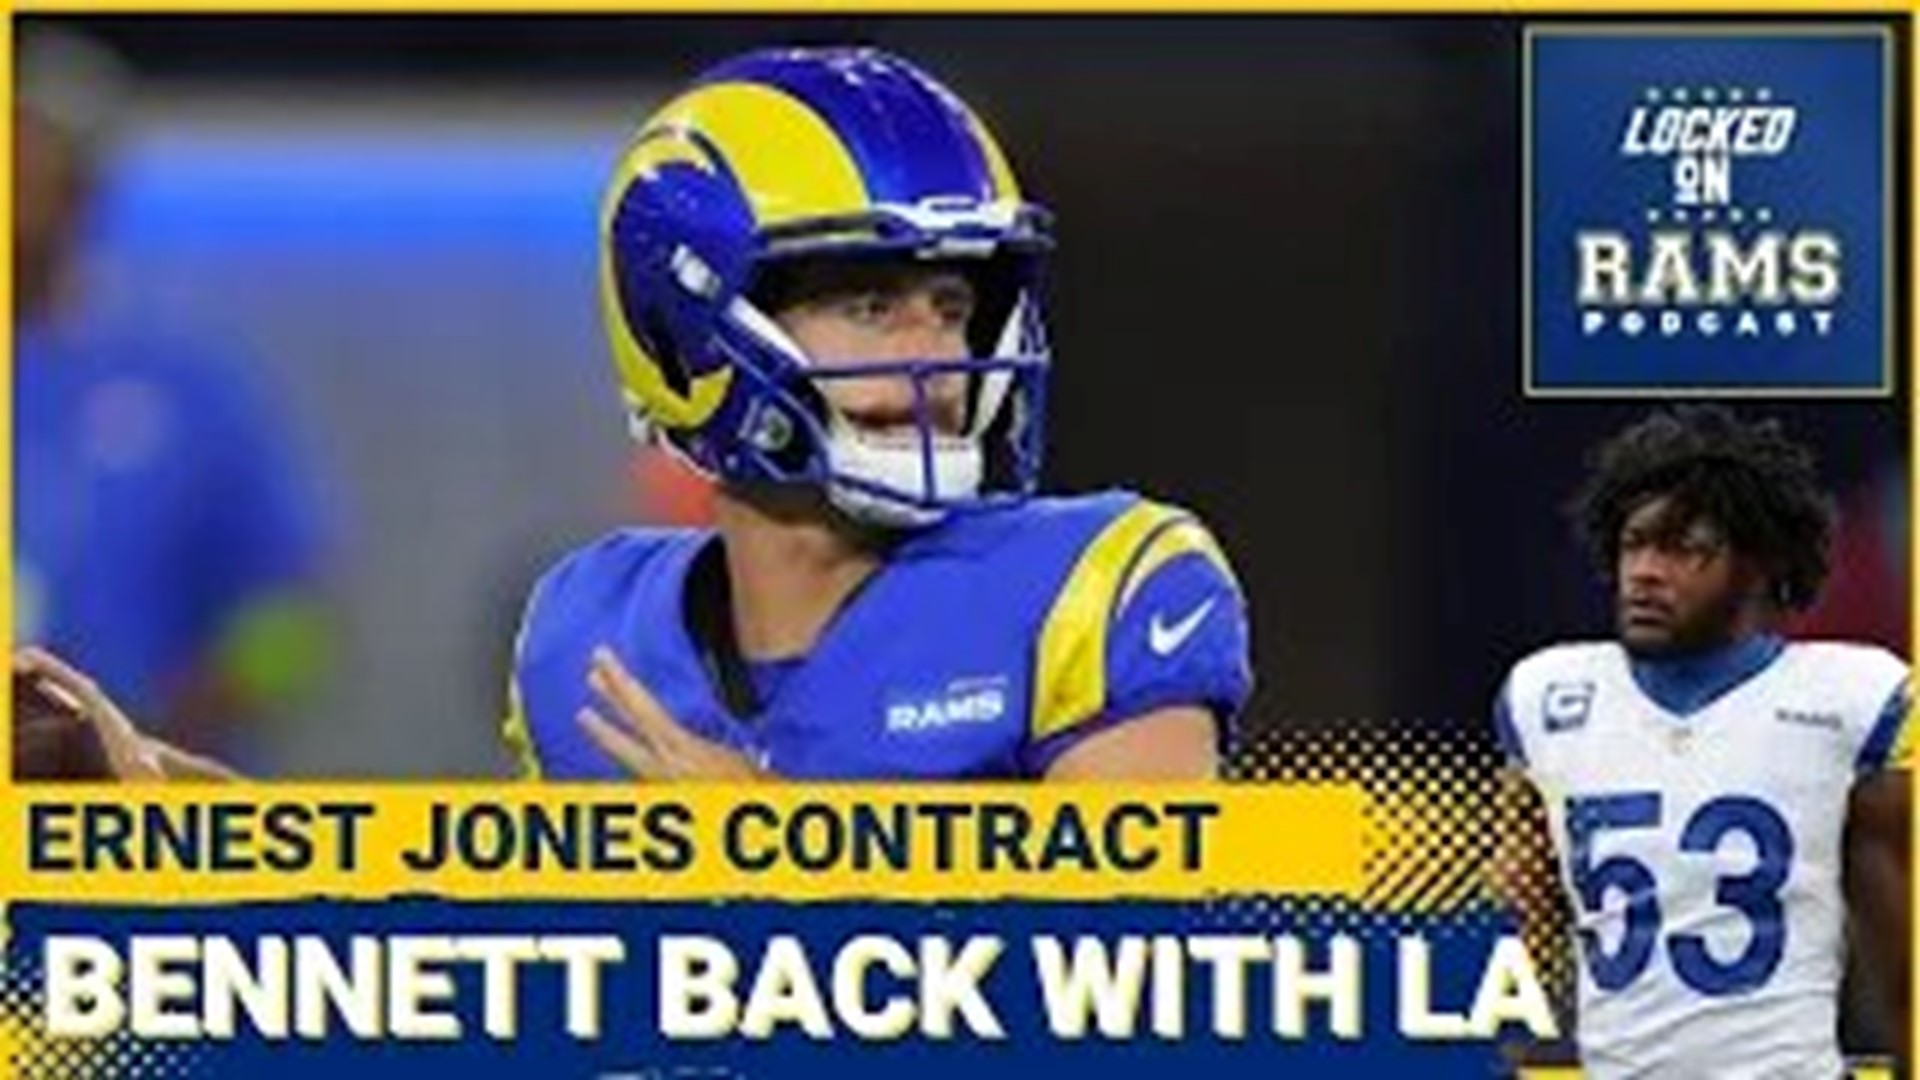 Rams Keeping Stetson LA Not Extending Ernest Jones, Rams Draft